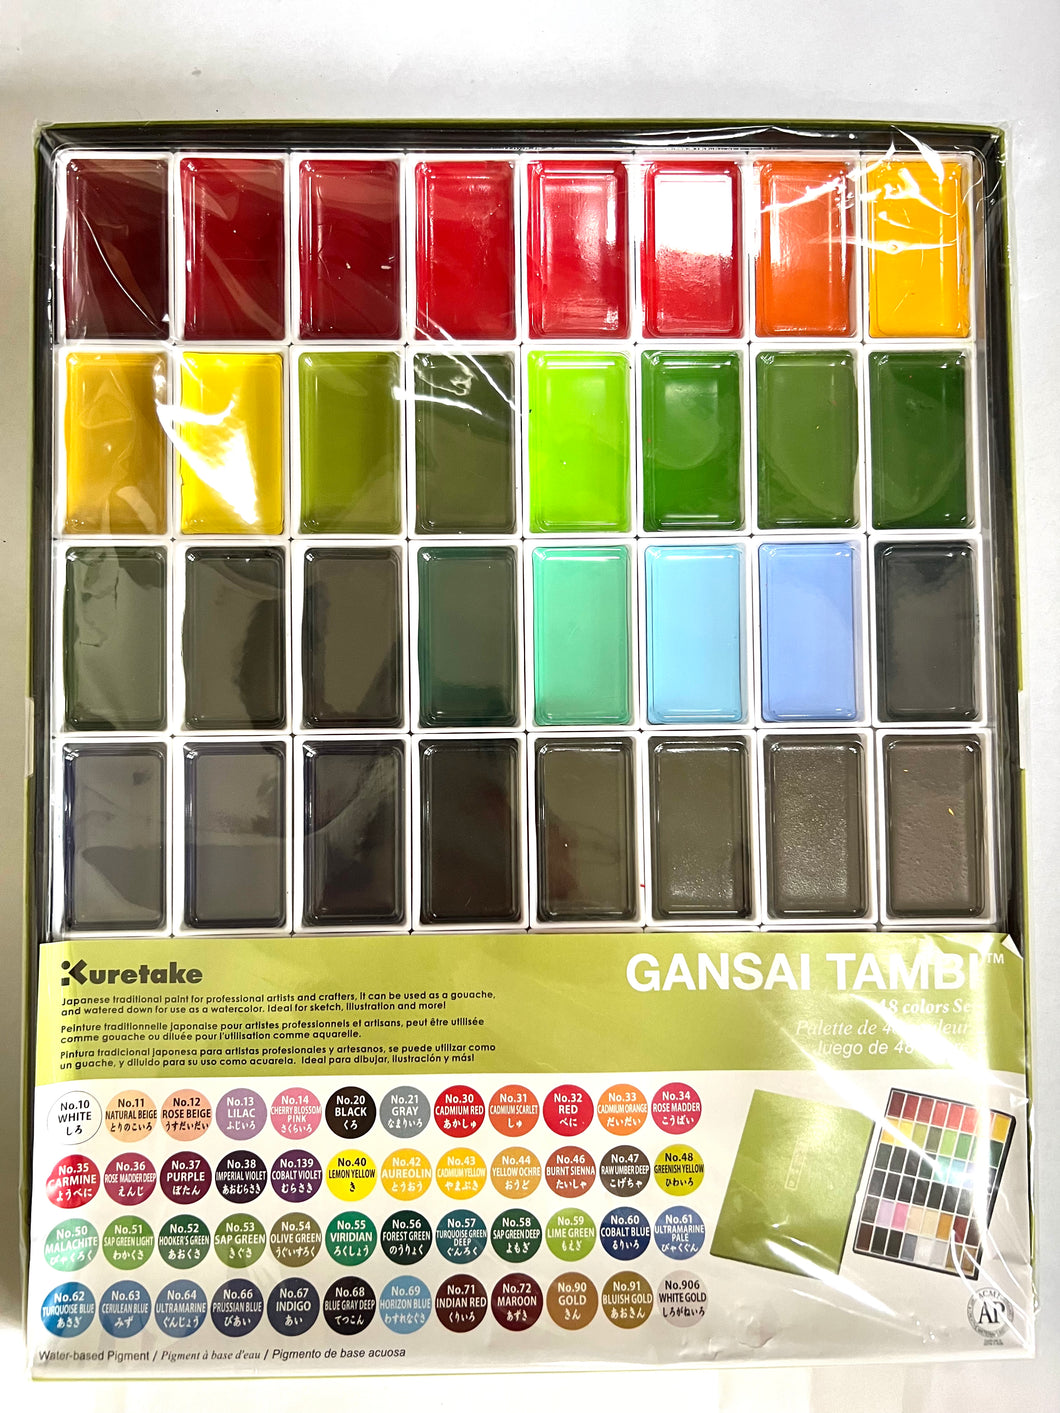 Kuretake Gansai Tambi 24 Color Set